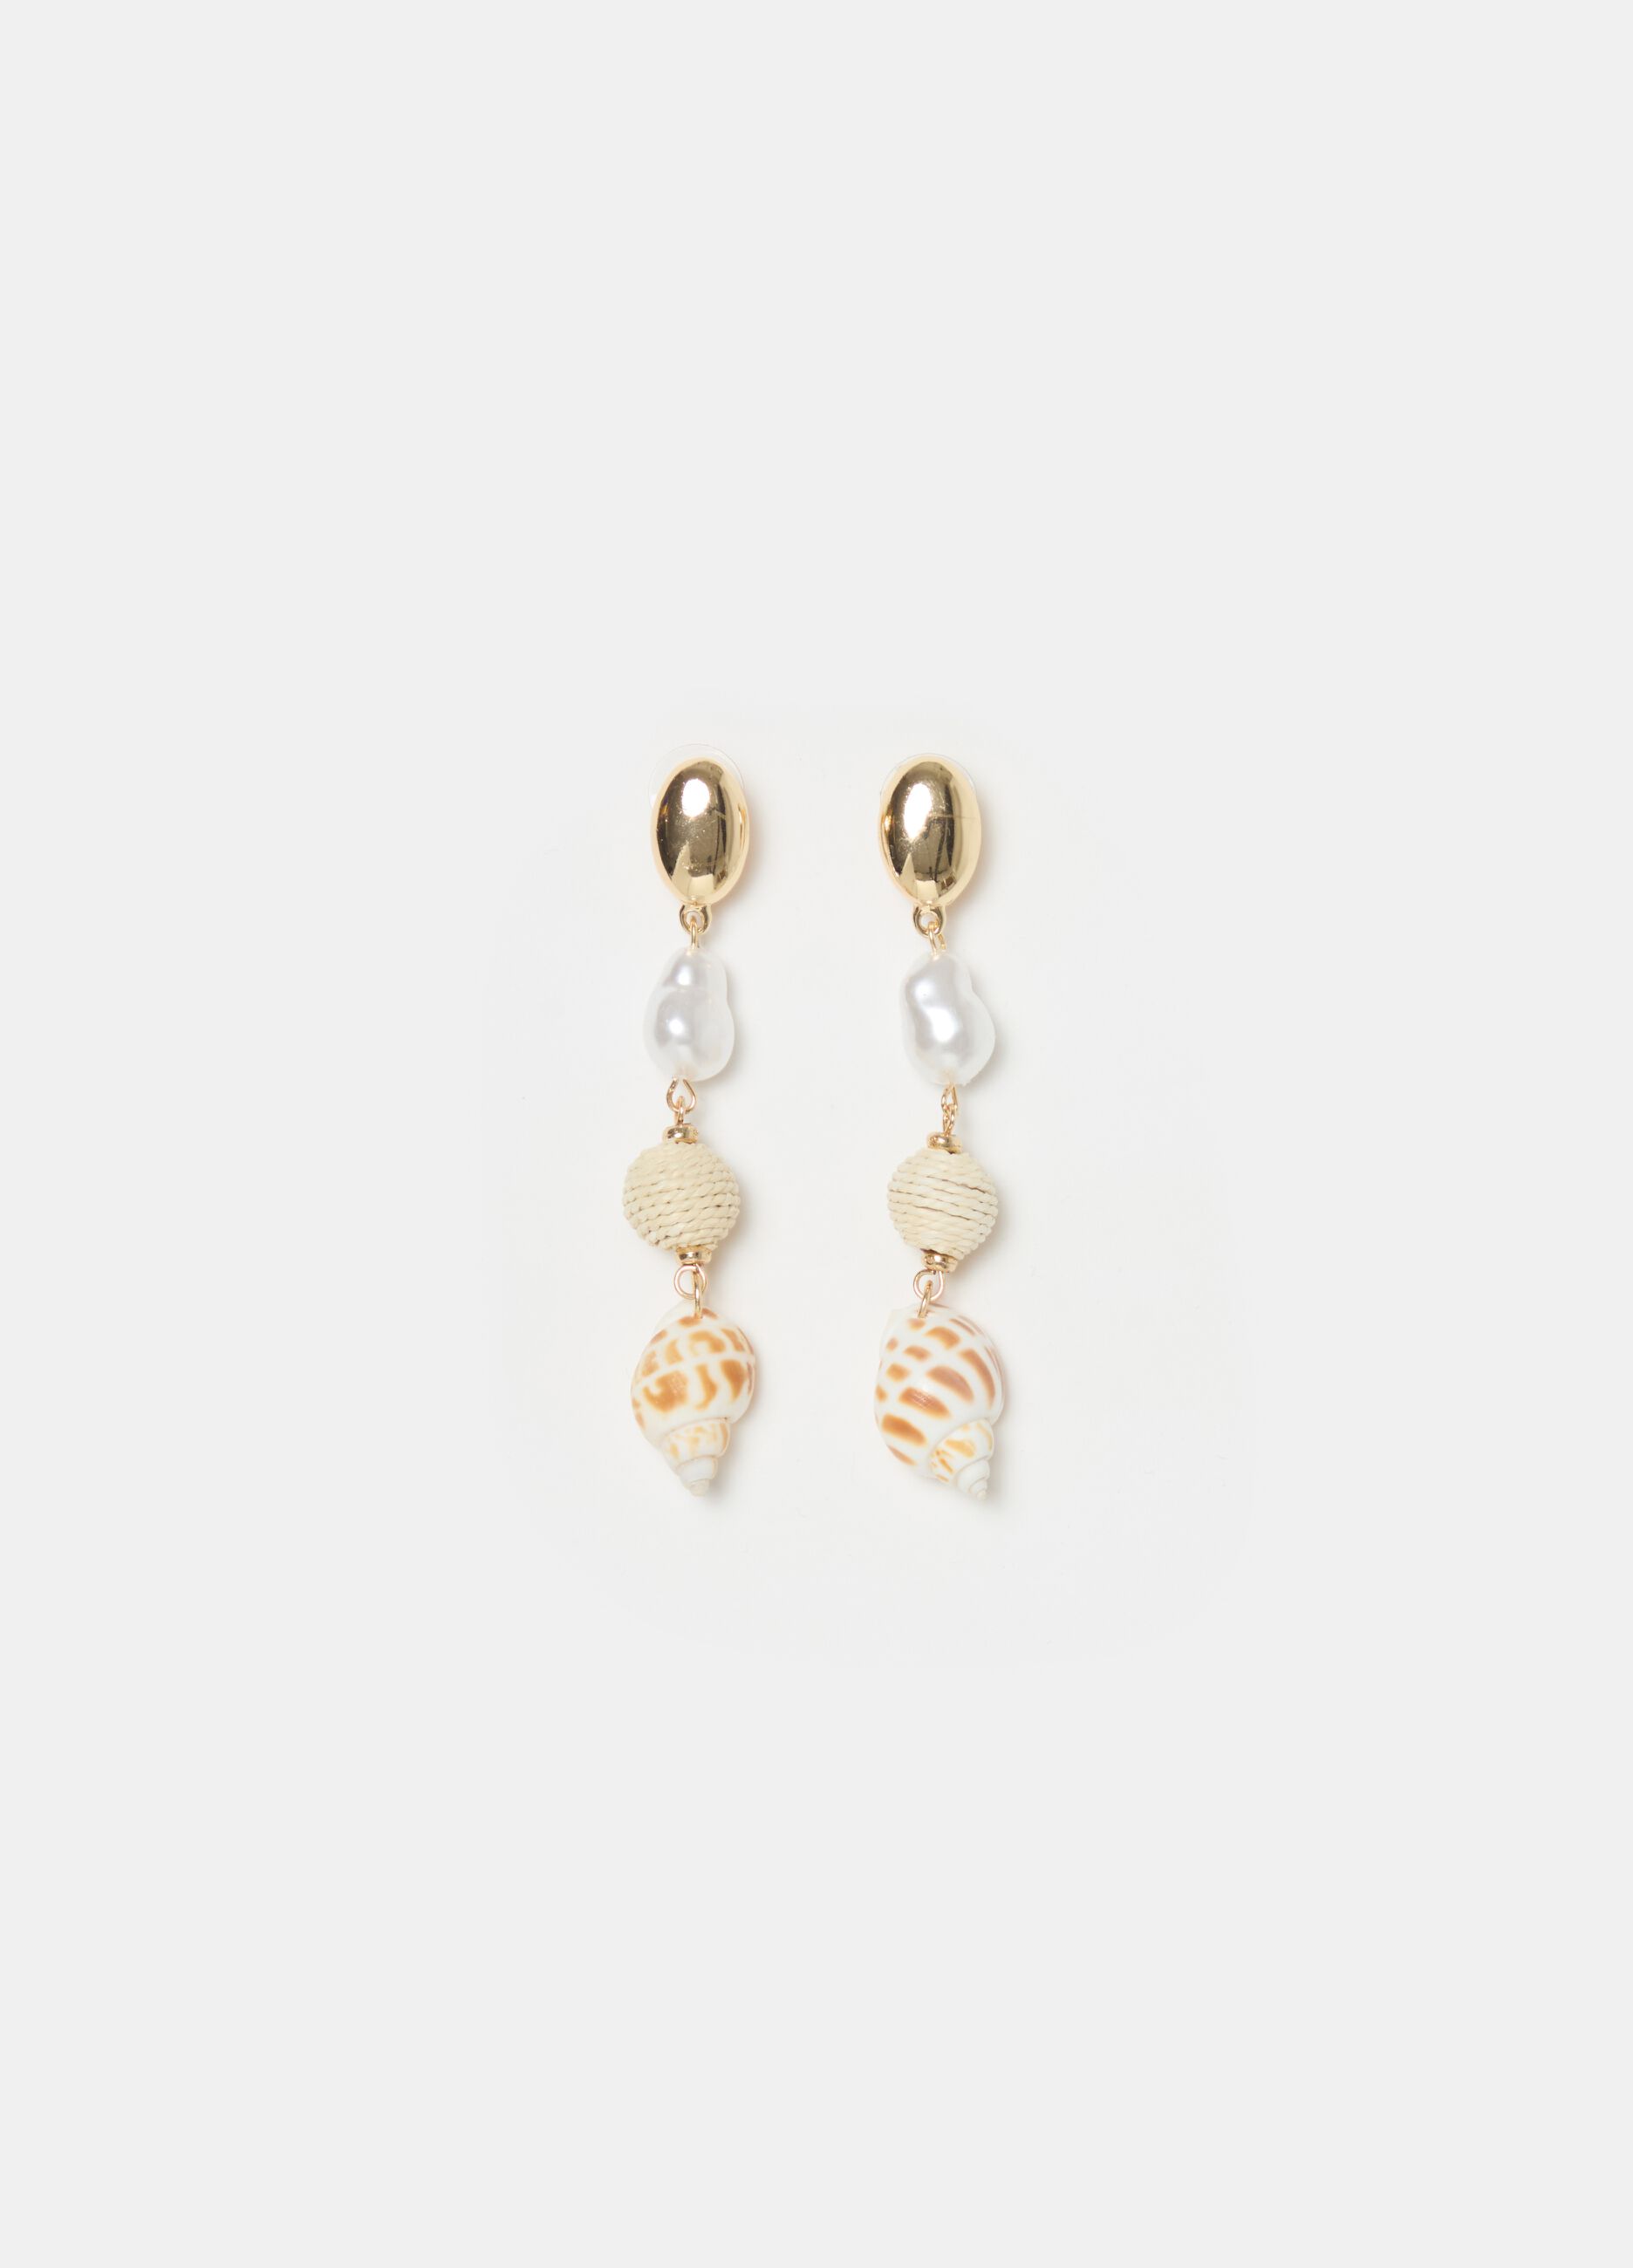 Pendant earrings with shells